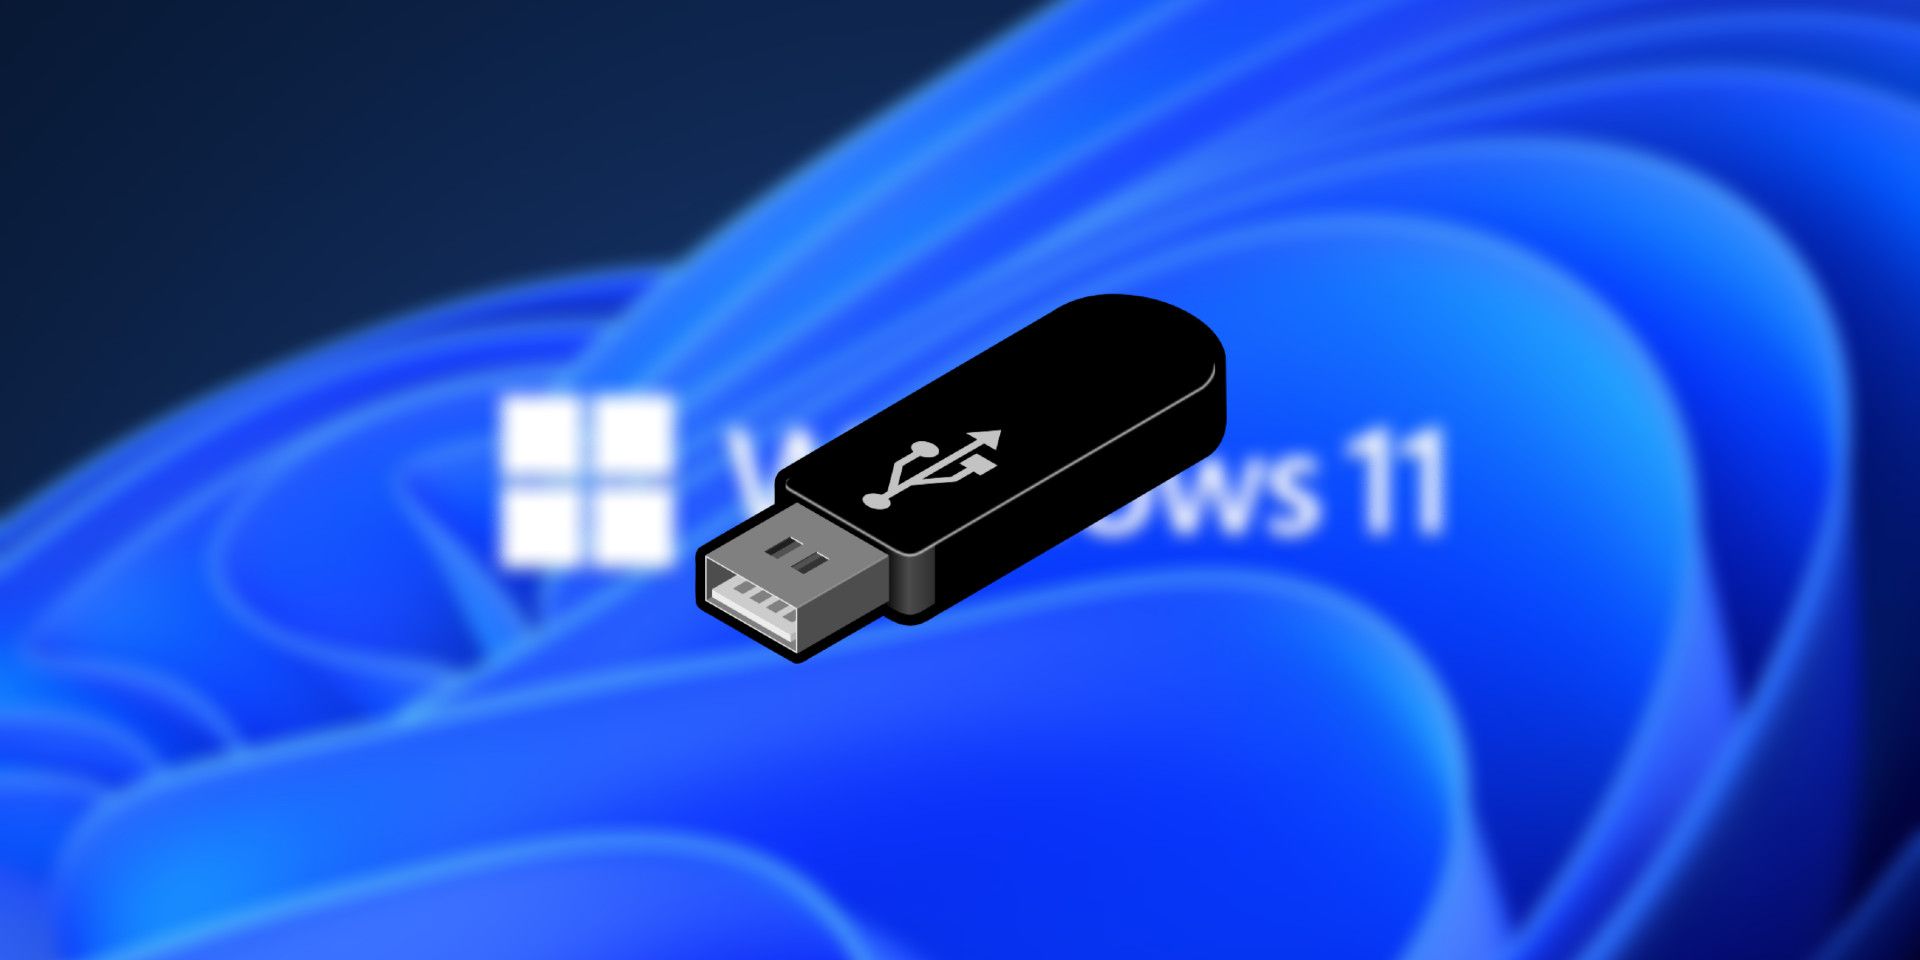 Windows 11 logo with USB pen drive